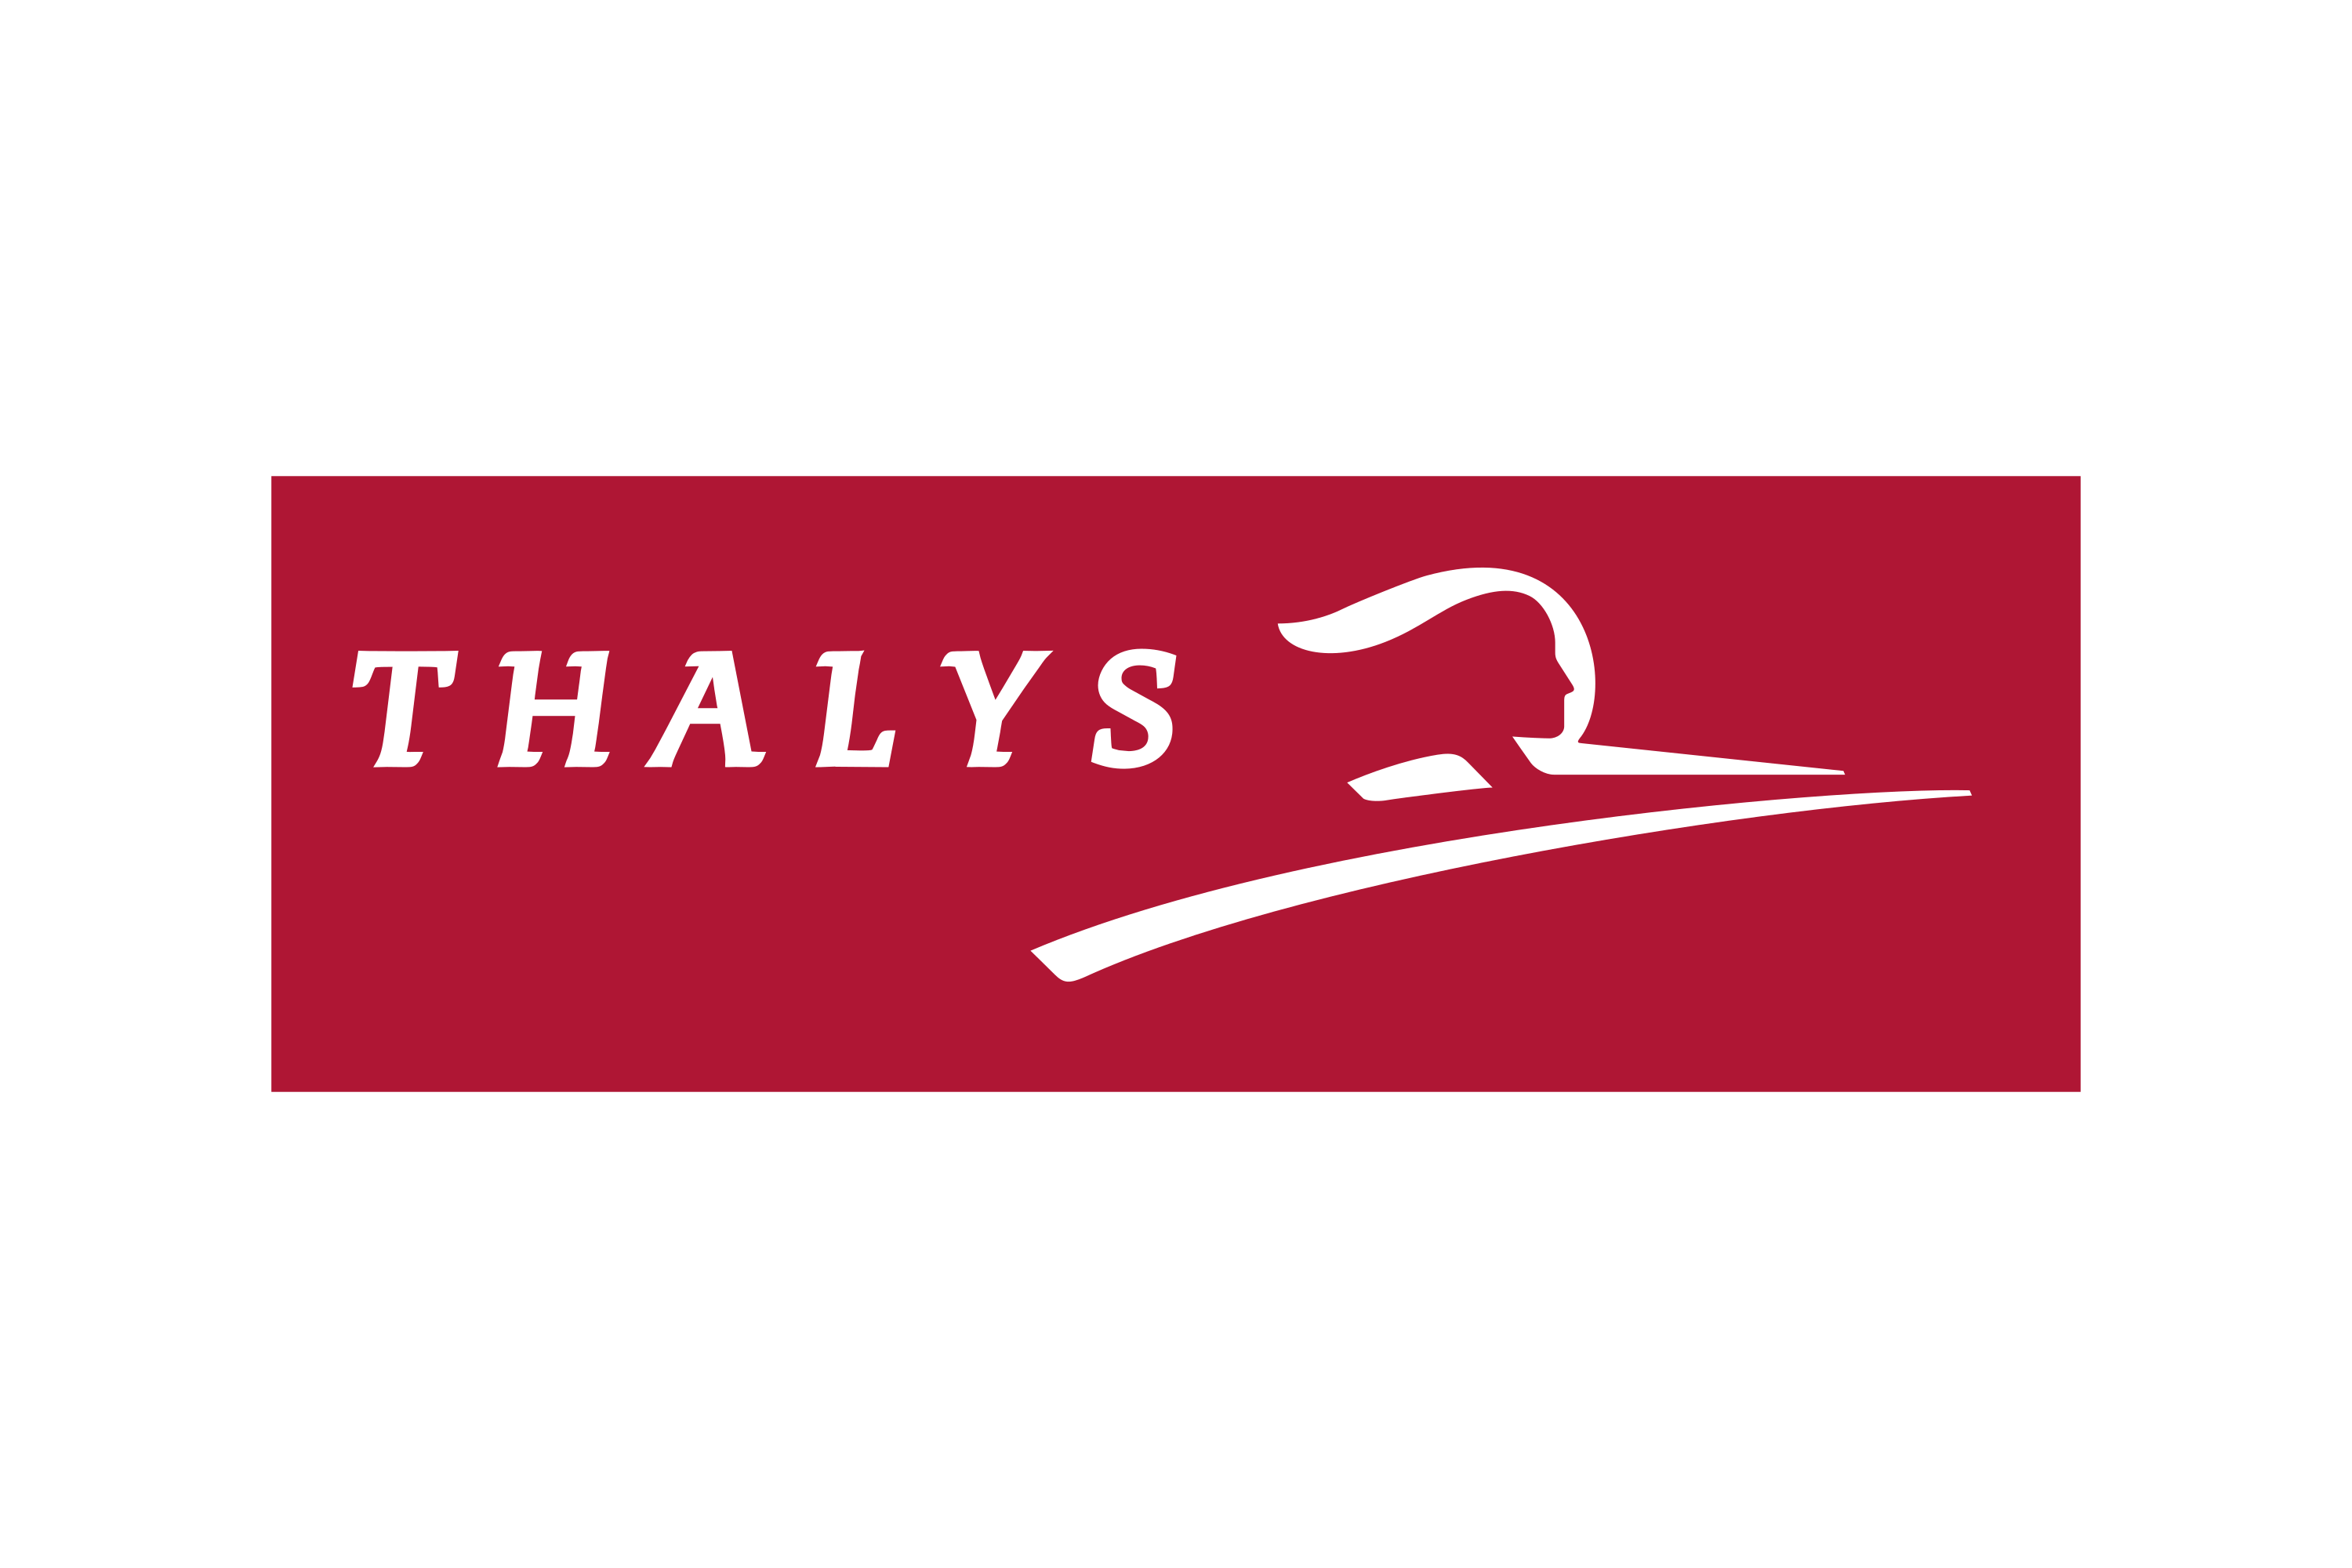 Download Thalys Logo in SVG Vector or PNG File Format - Logo.wine